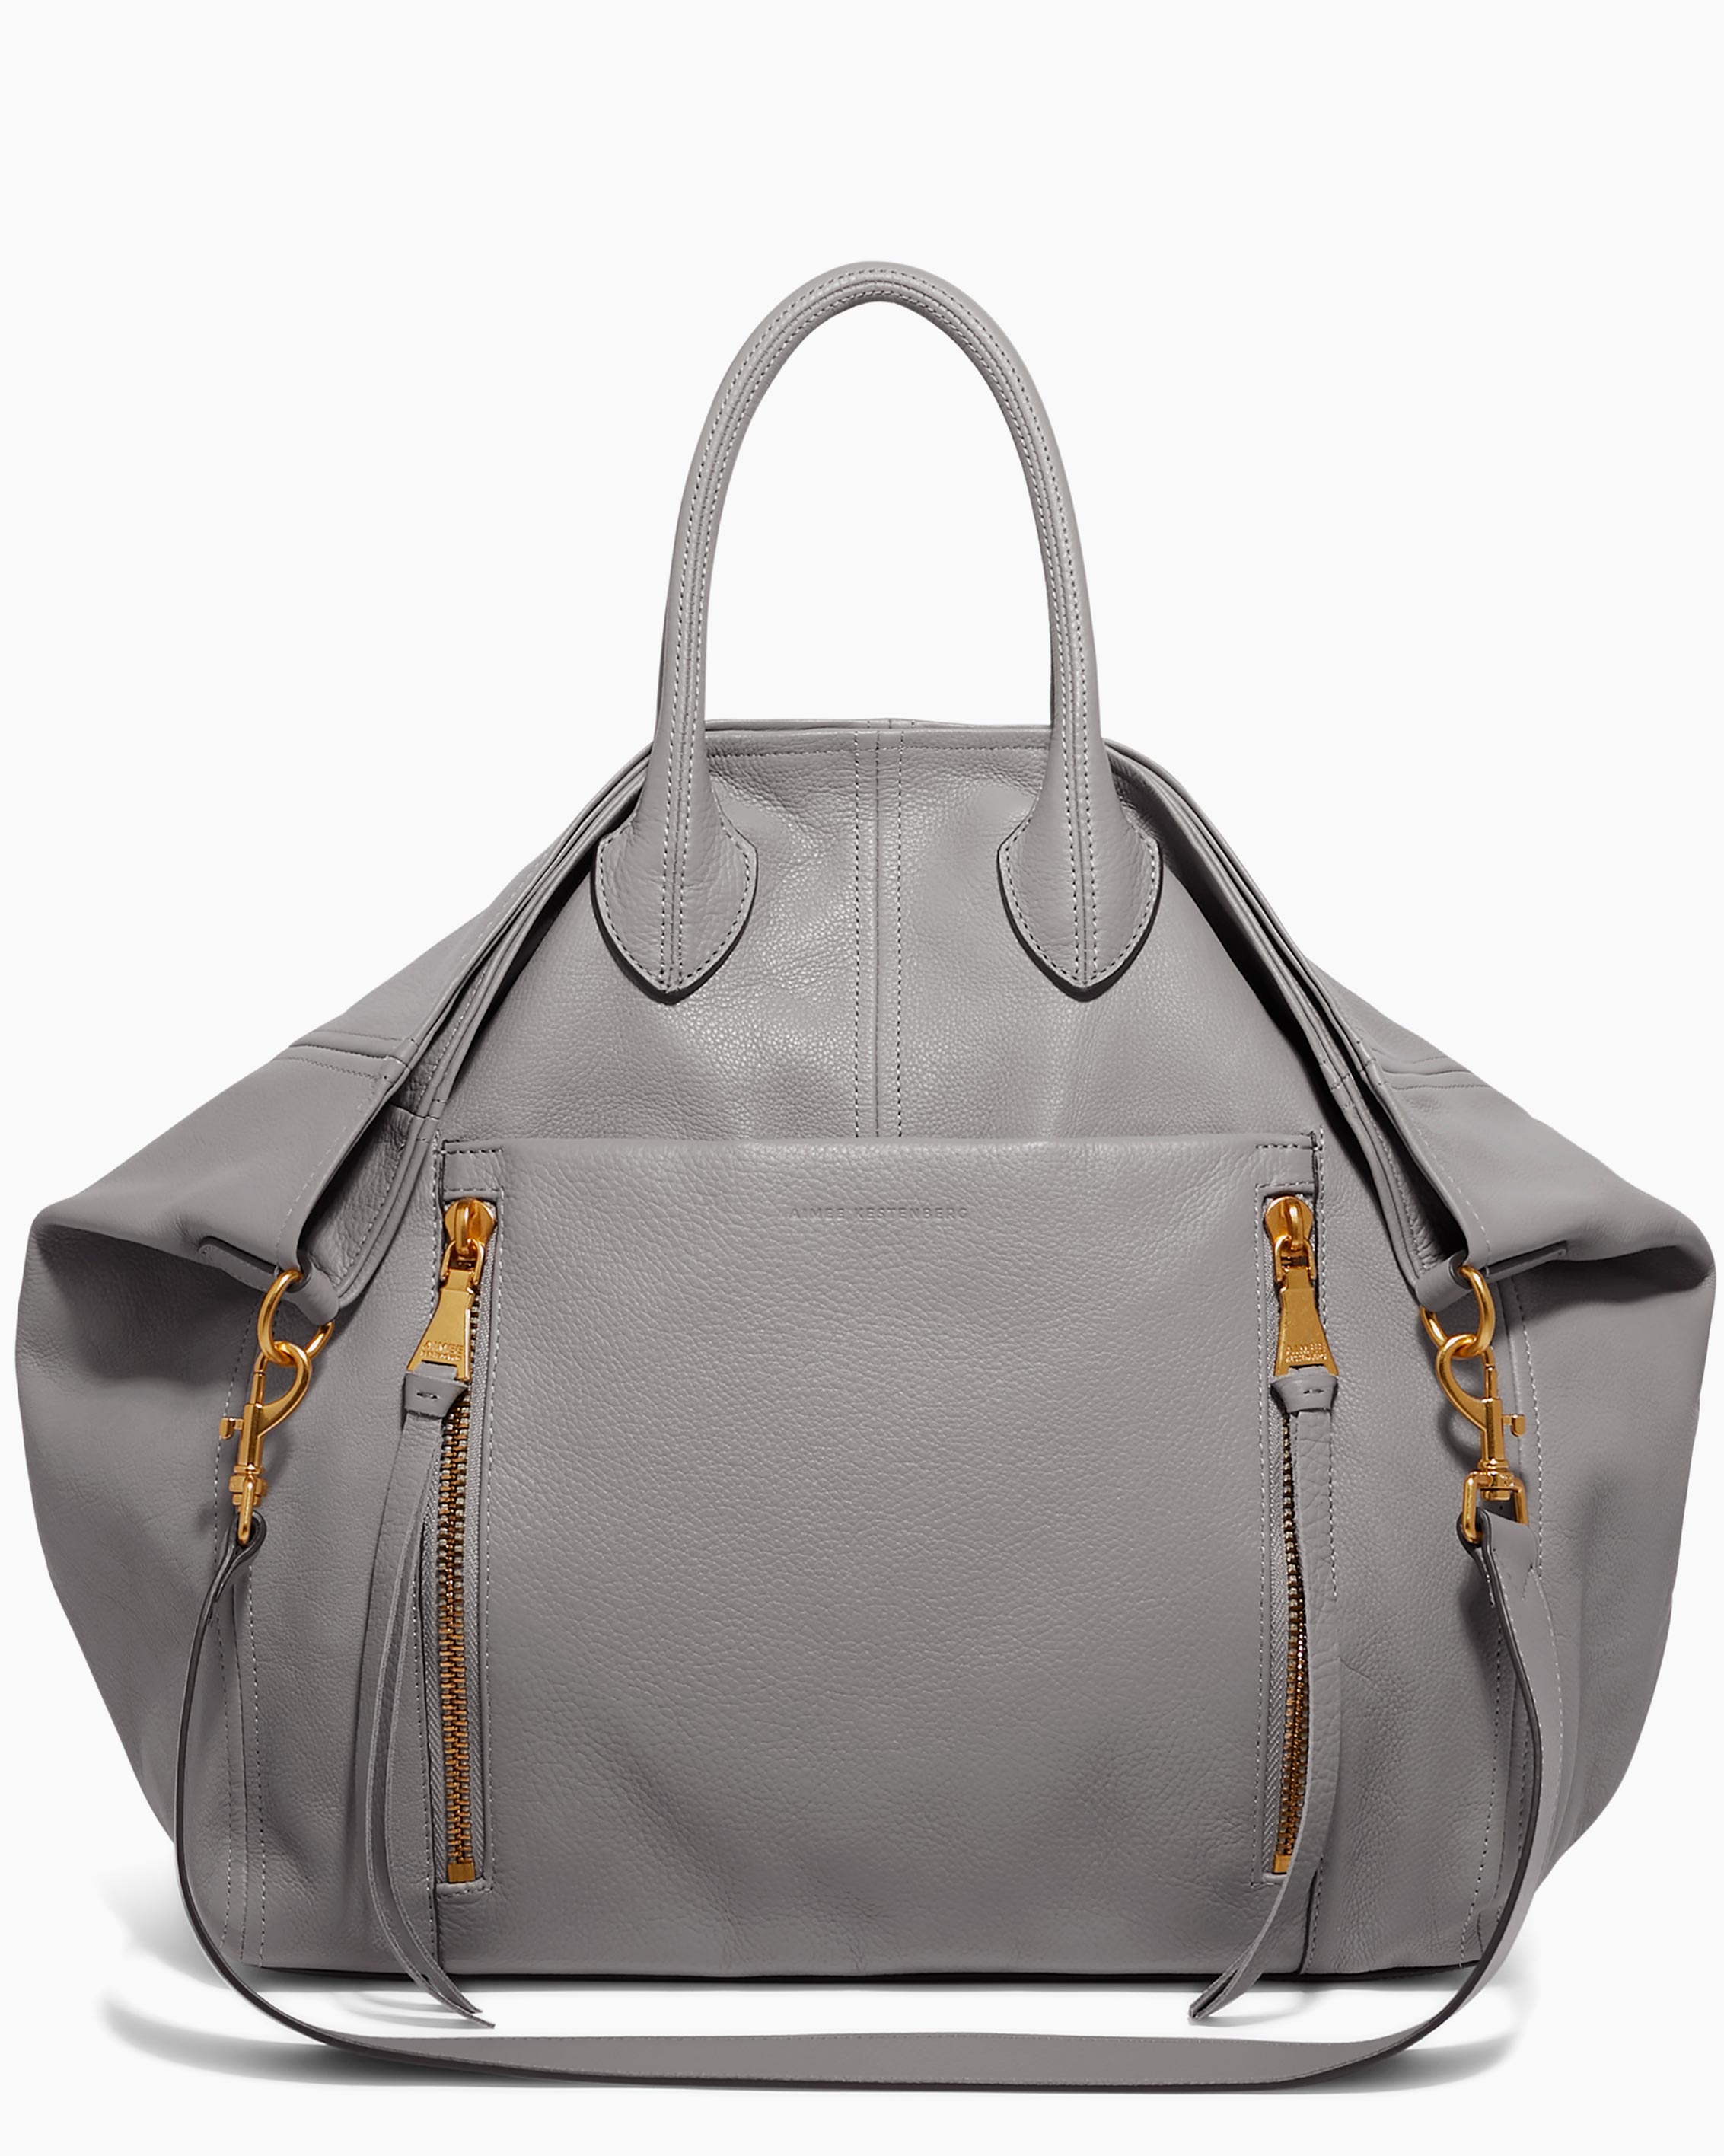 Coney Island. Convertible Tote / Bucket Bag – The Escapade Bag